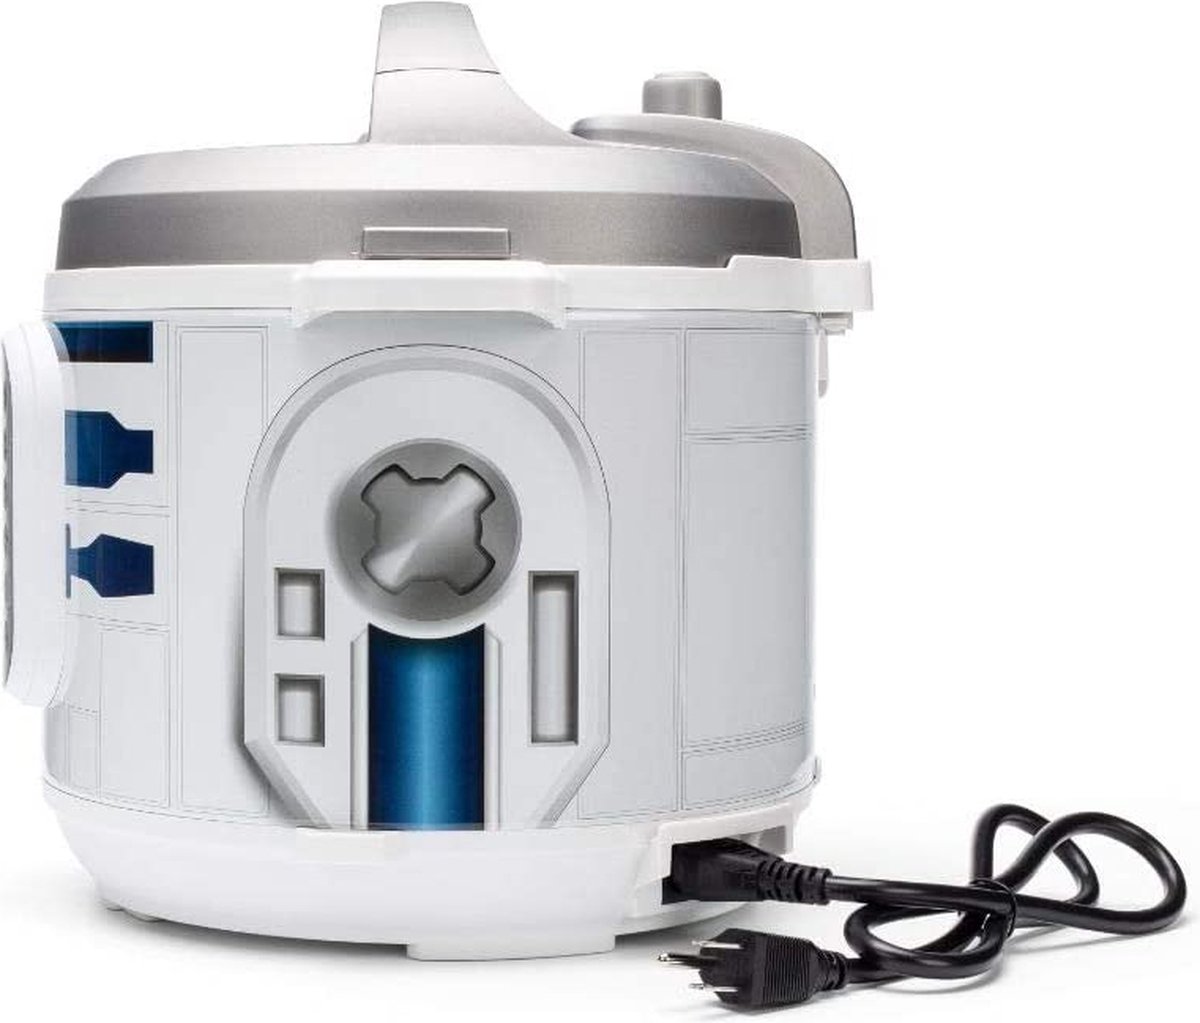 Instant Pot Duo 7-in-1 5.7L Star Wars R2-D2 Multi Pressure Cooker